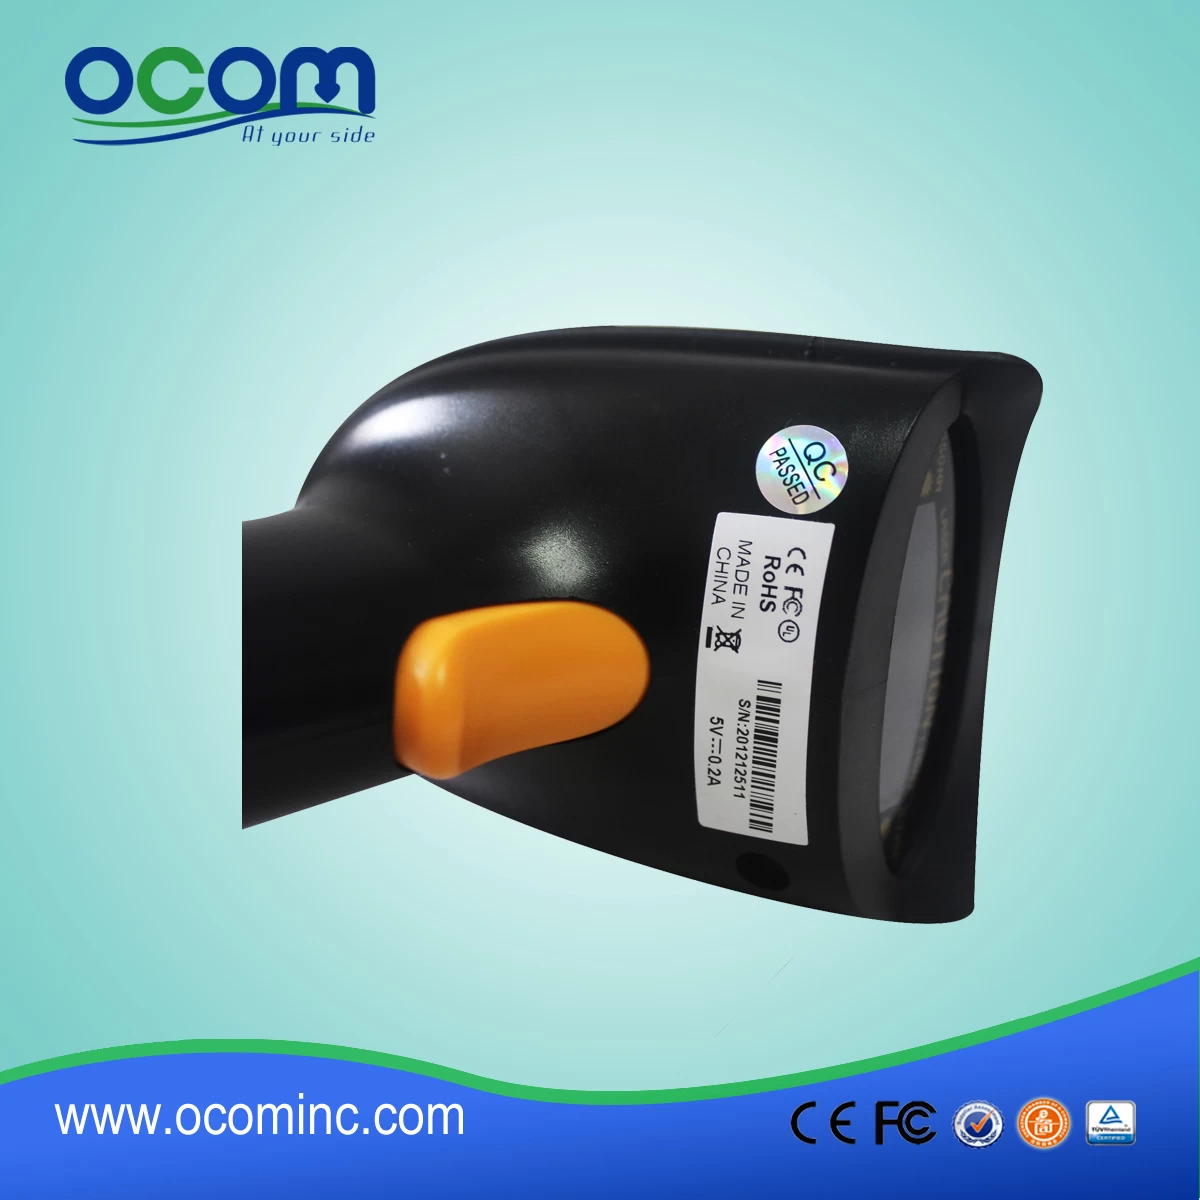 handheld mini bluetooth barcode scanner-OCBS-W700-B